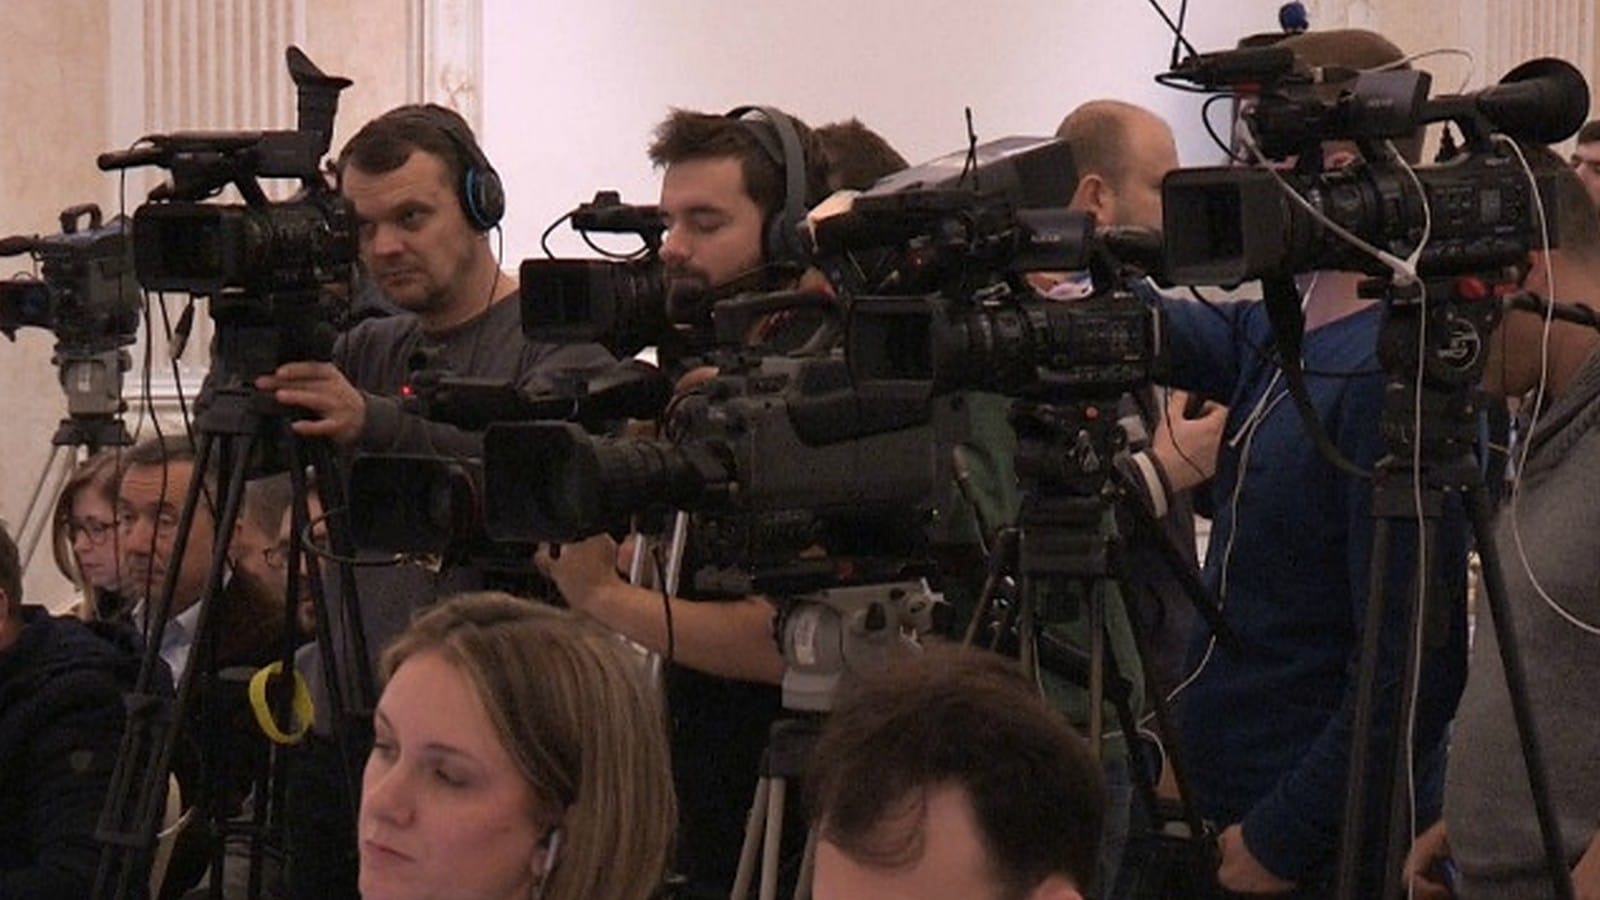 Attack on Kosovo Investigative Journalist Condemned